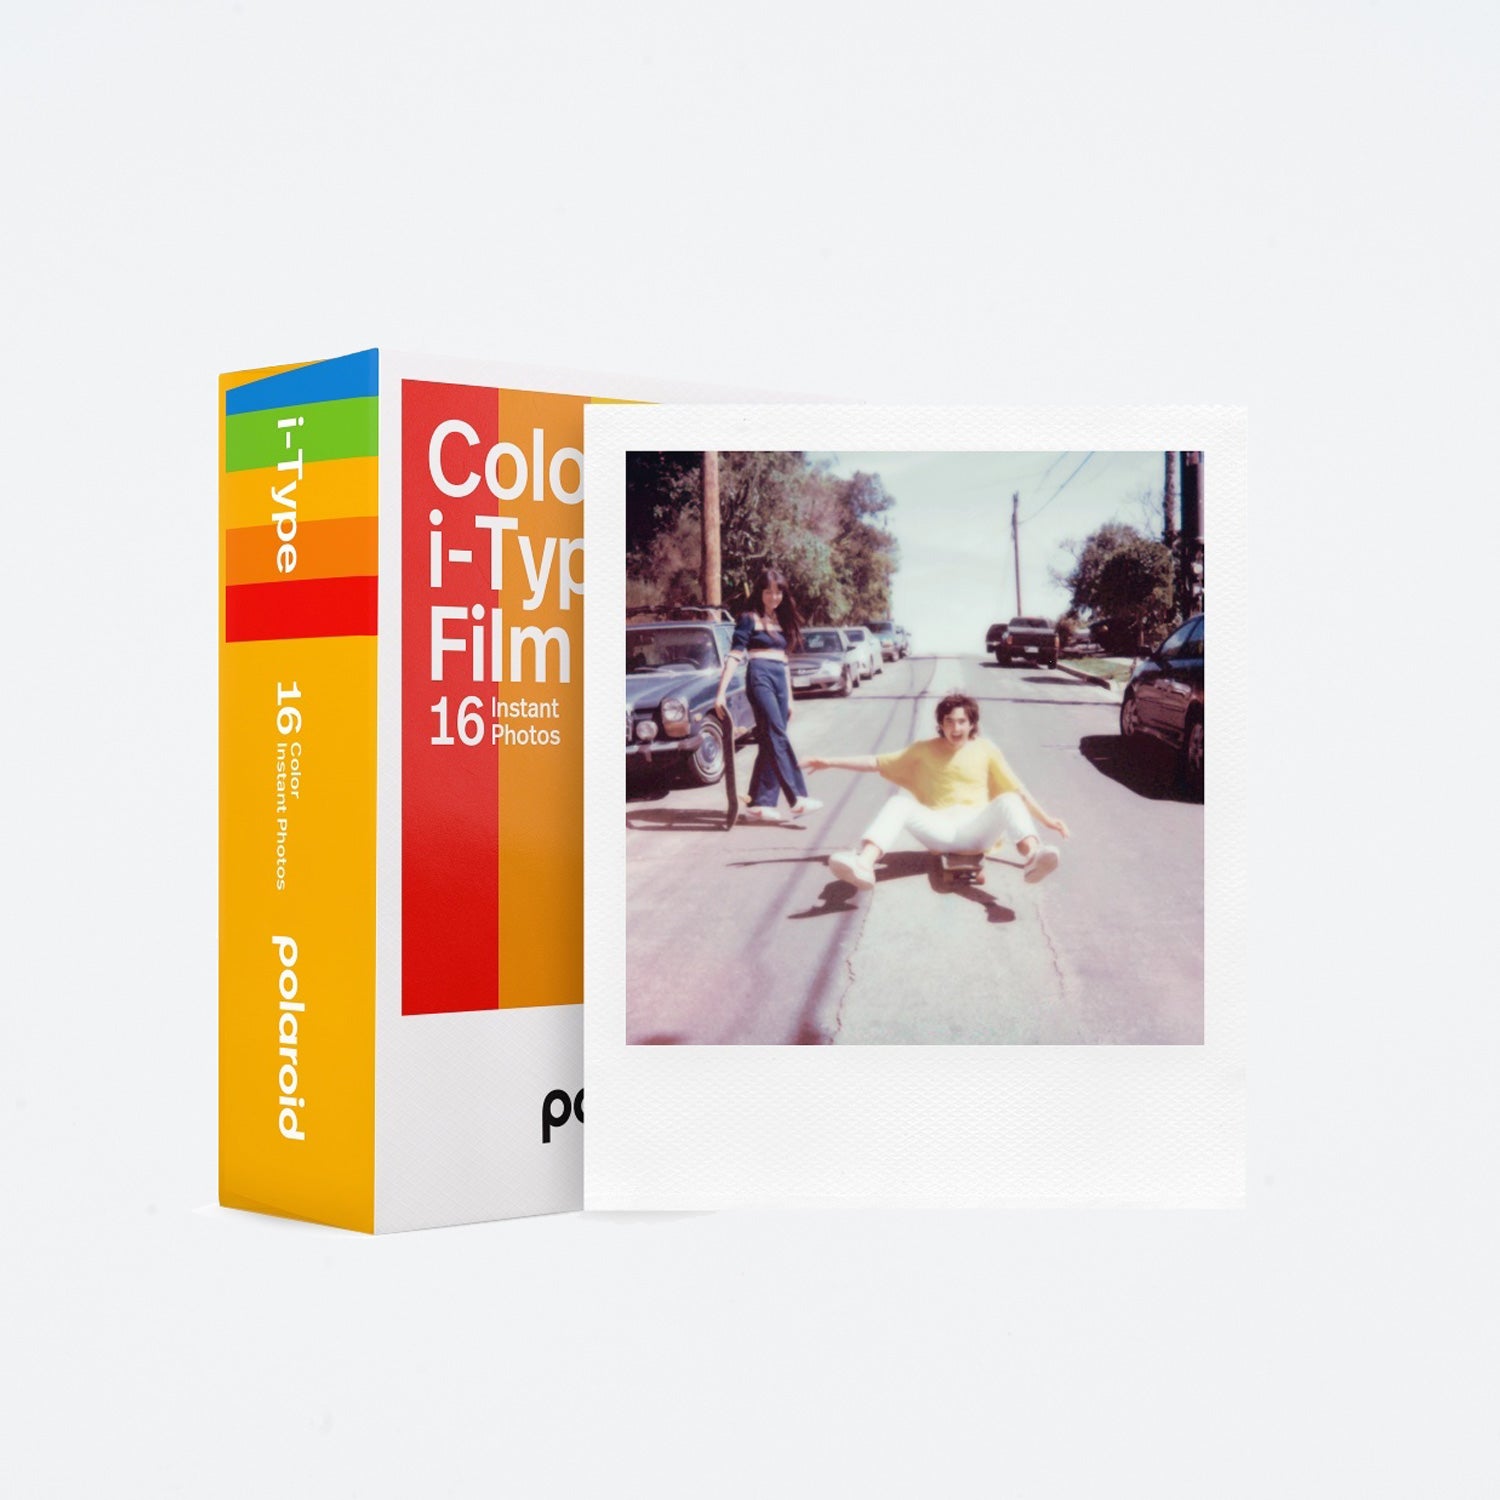 Polaroid i-Type Color Farb-Film, 2er Pack